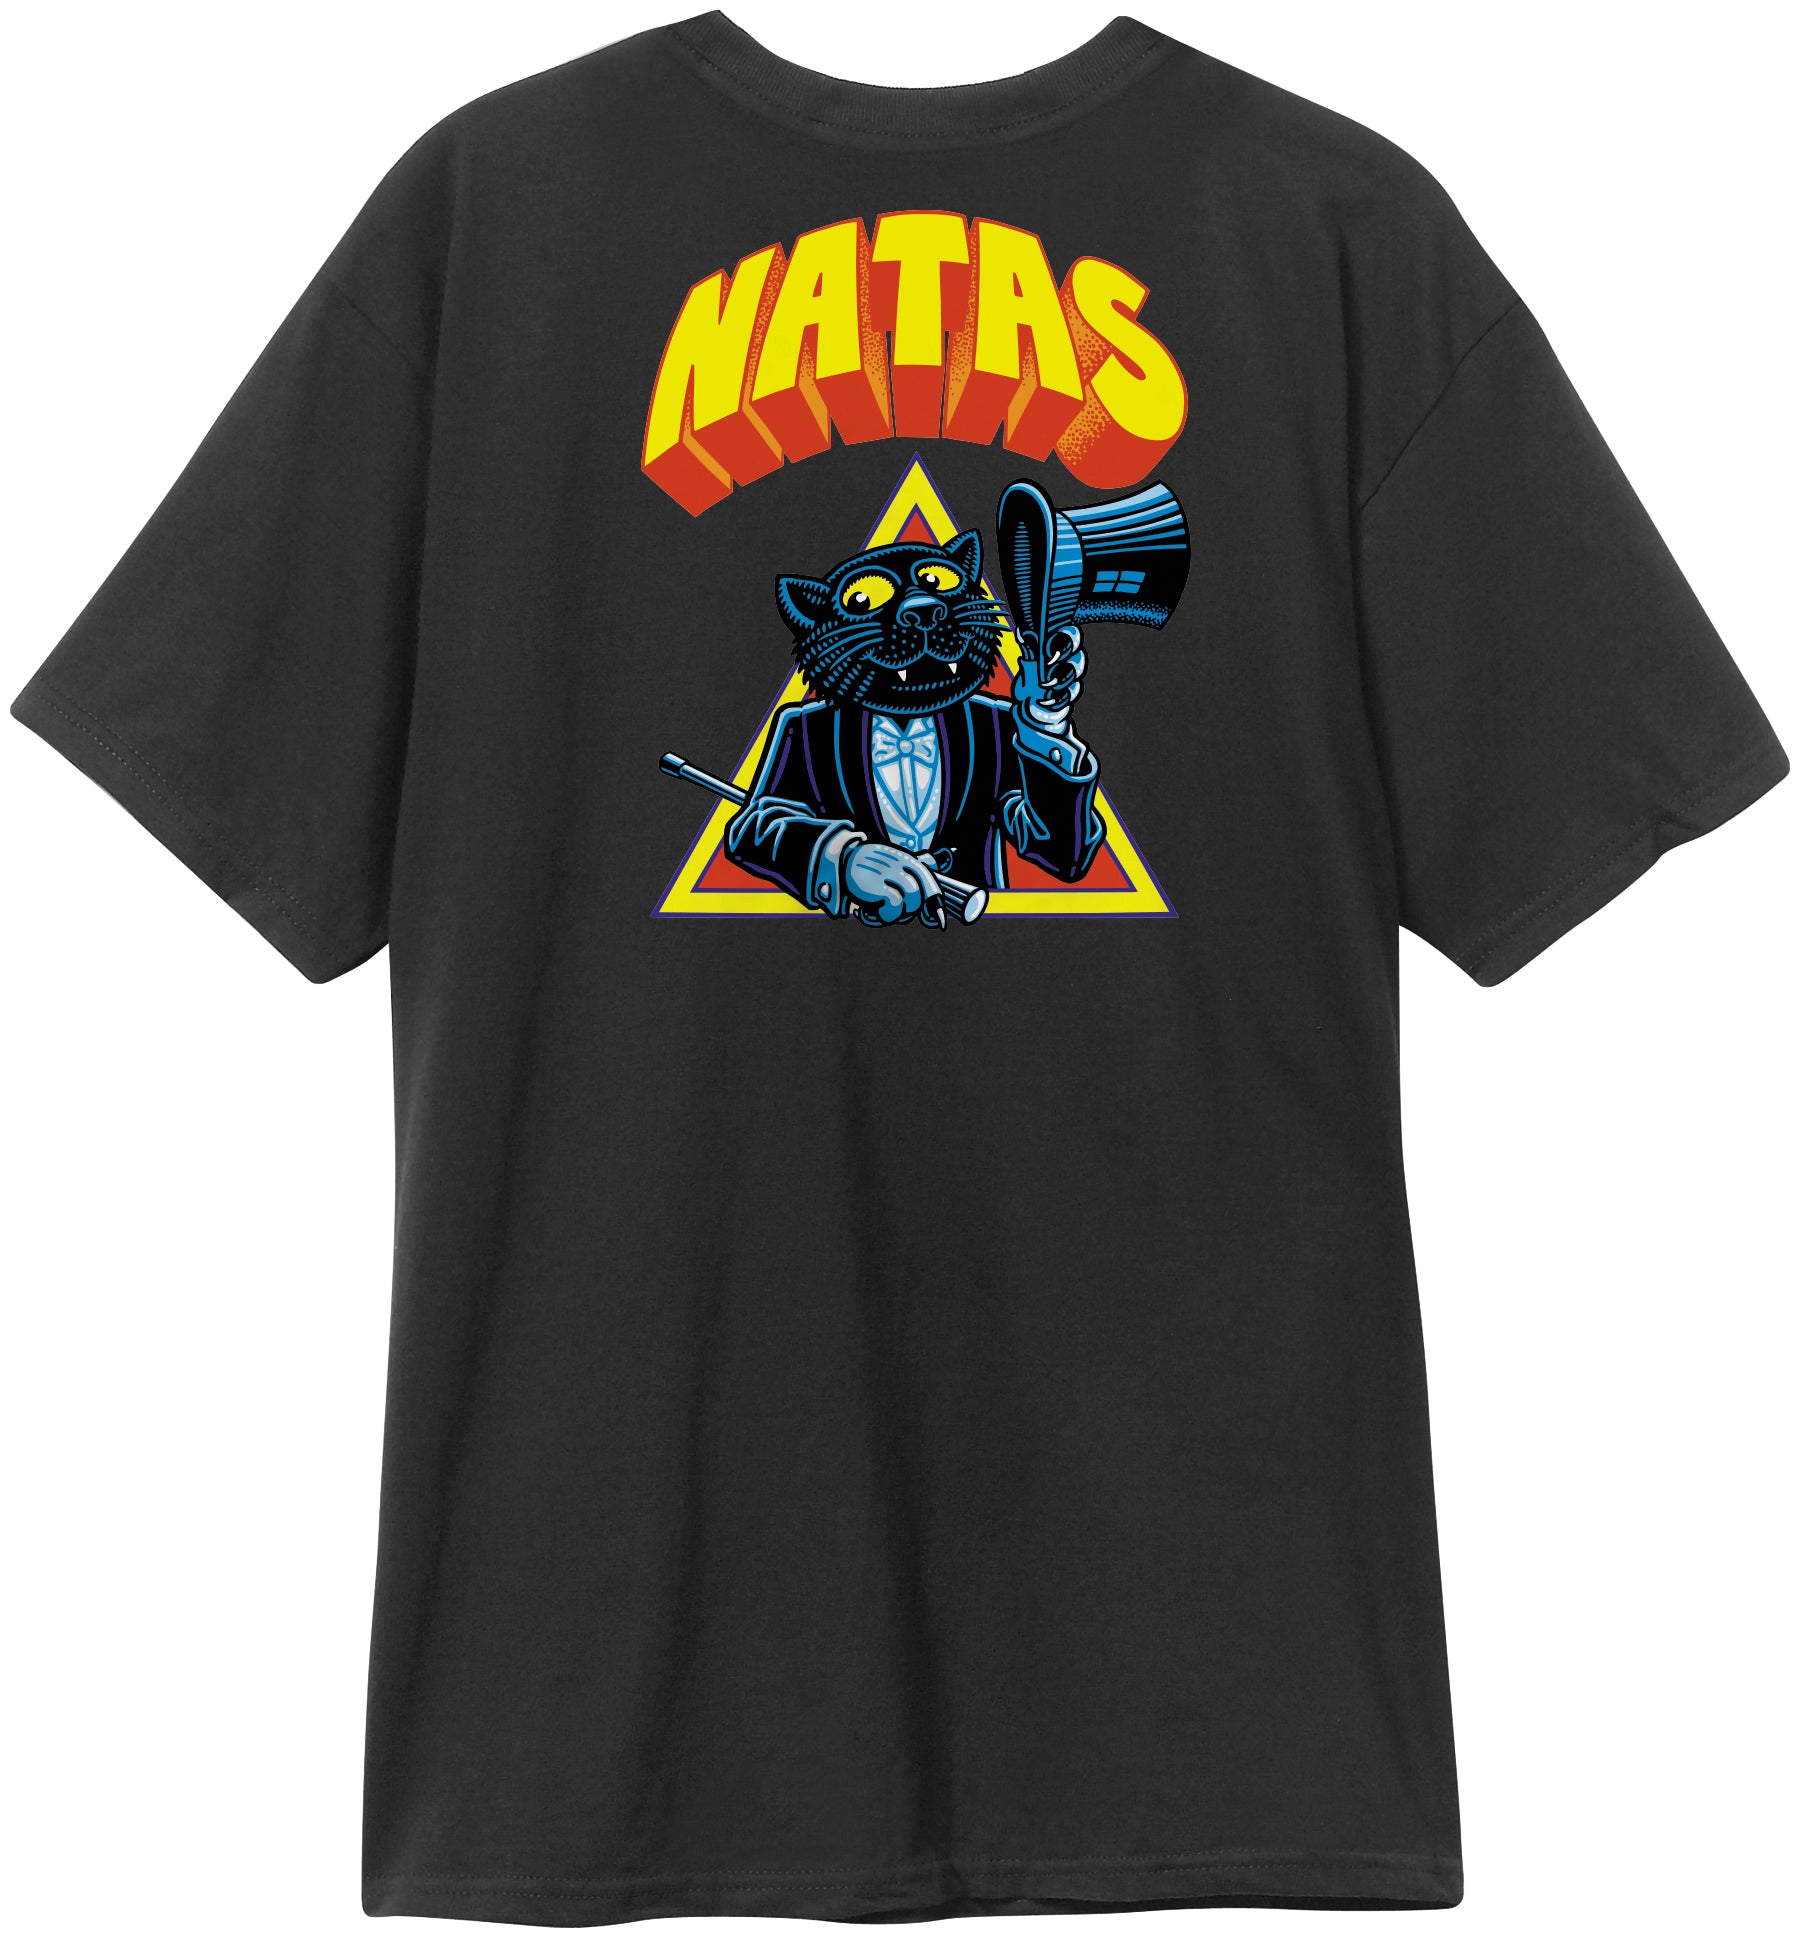 Heritage 101 Natas Panther T-Shirt - Black - Invisible Board Shop